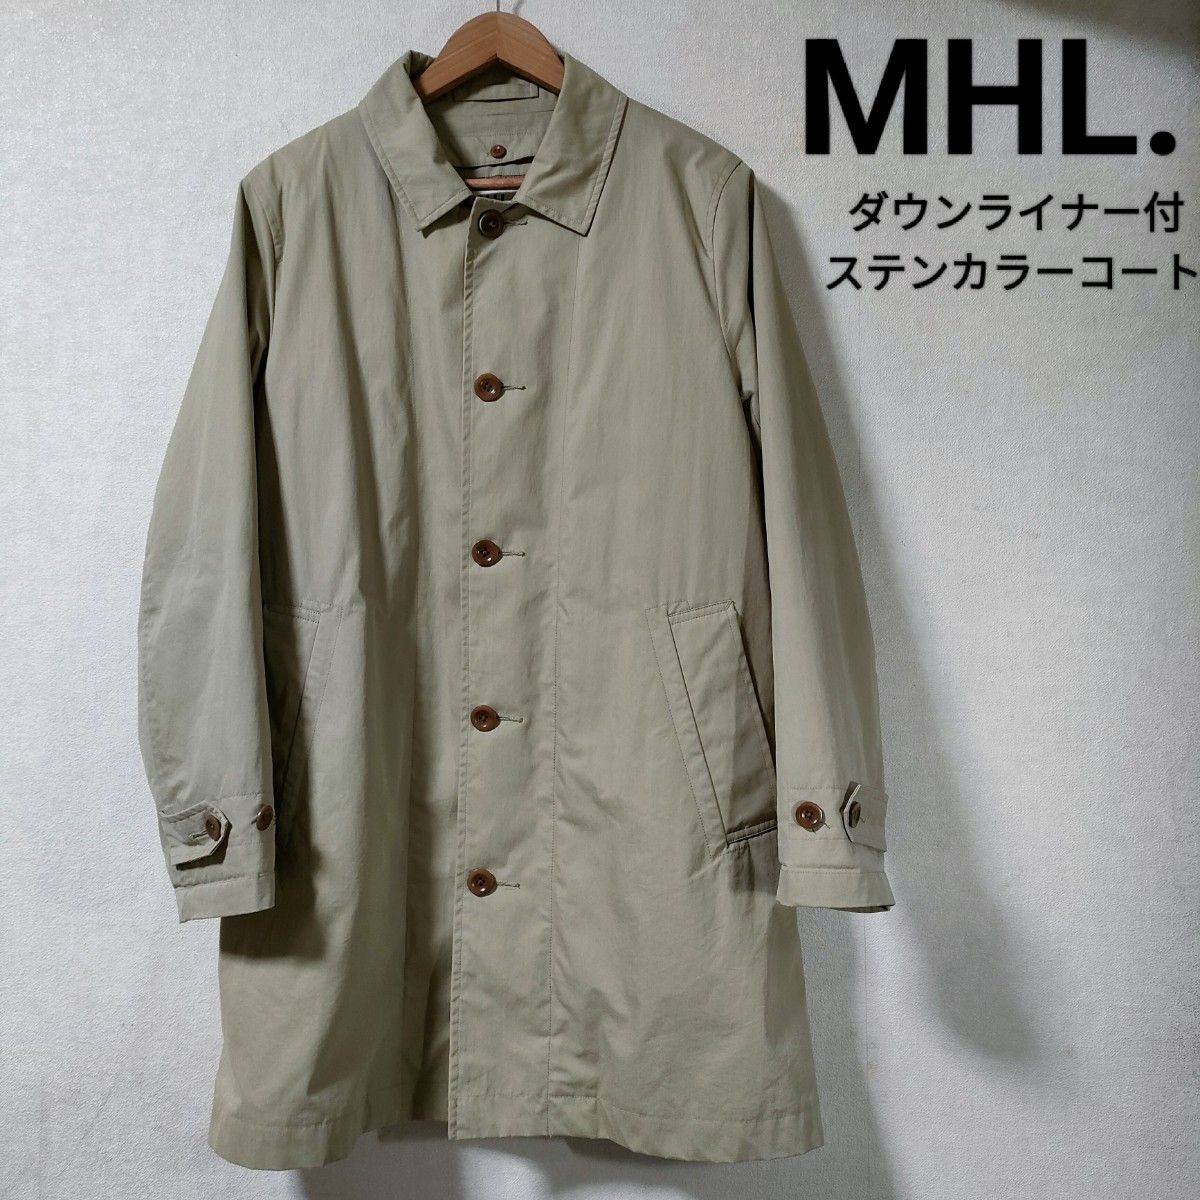 MHL. ライナー付ステンカラーコート - ruizvillandiego.com